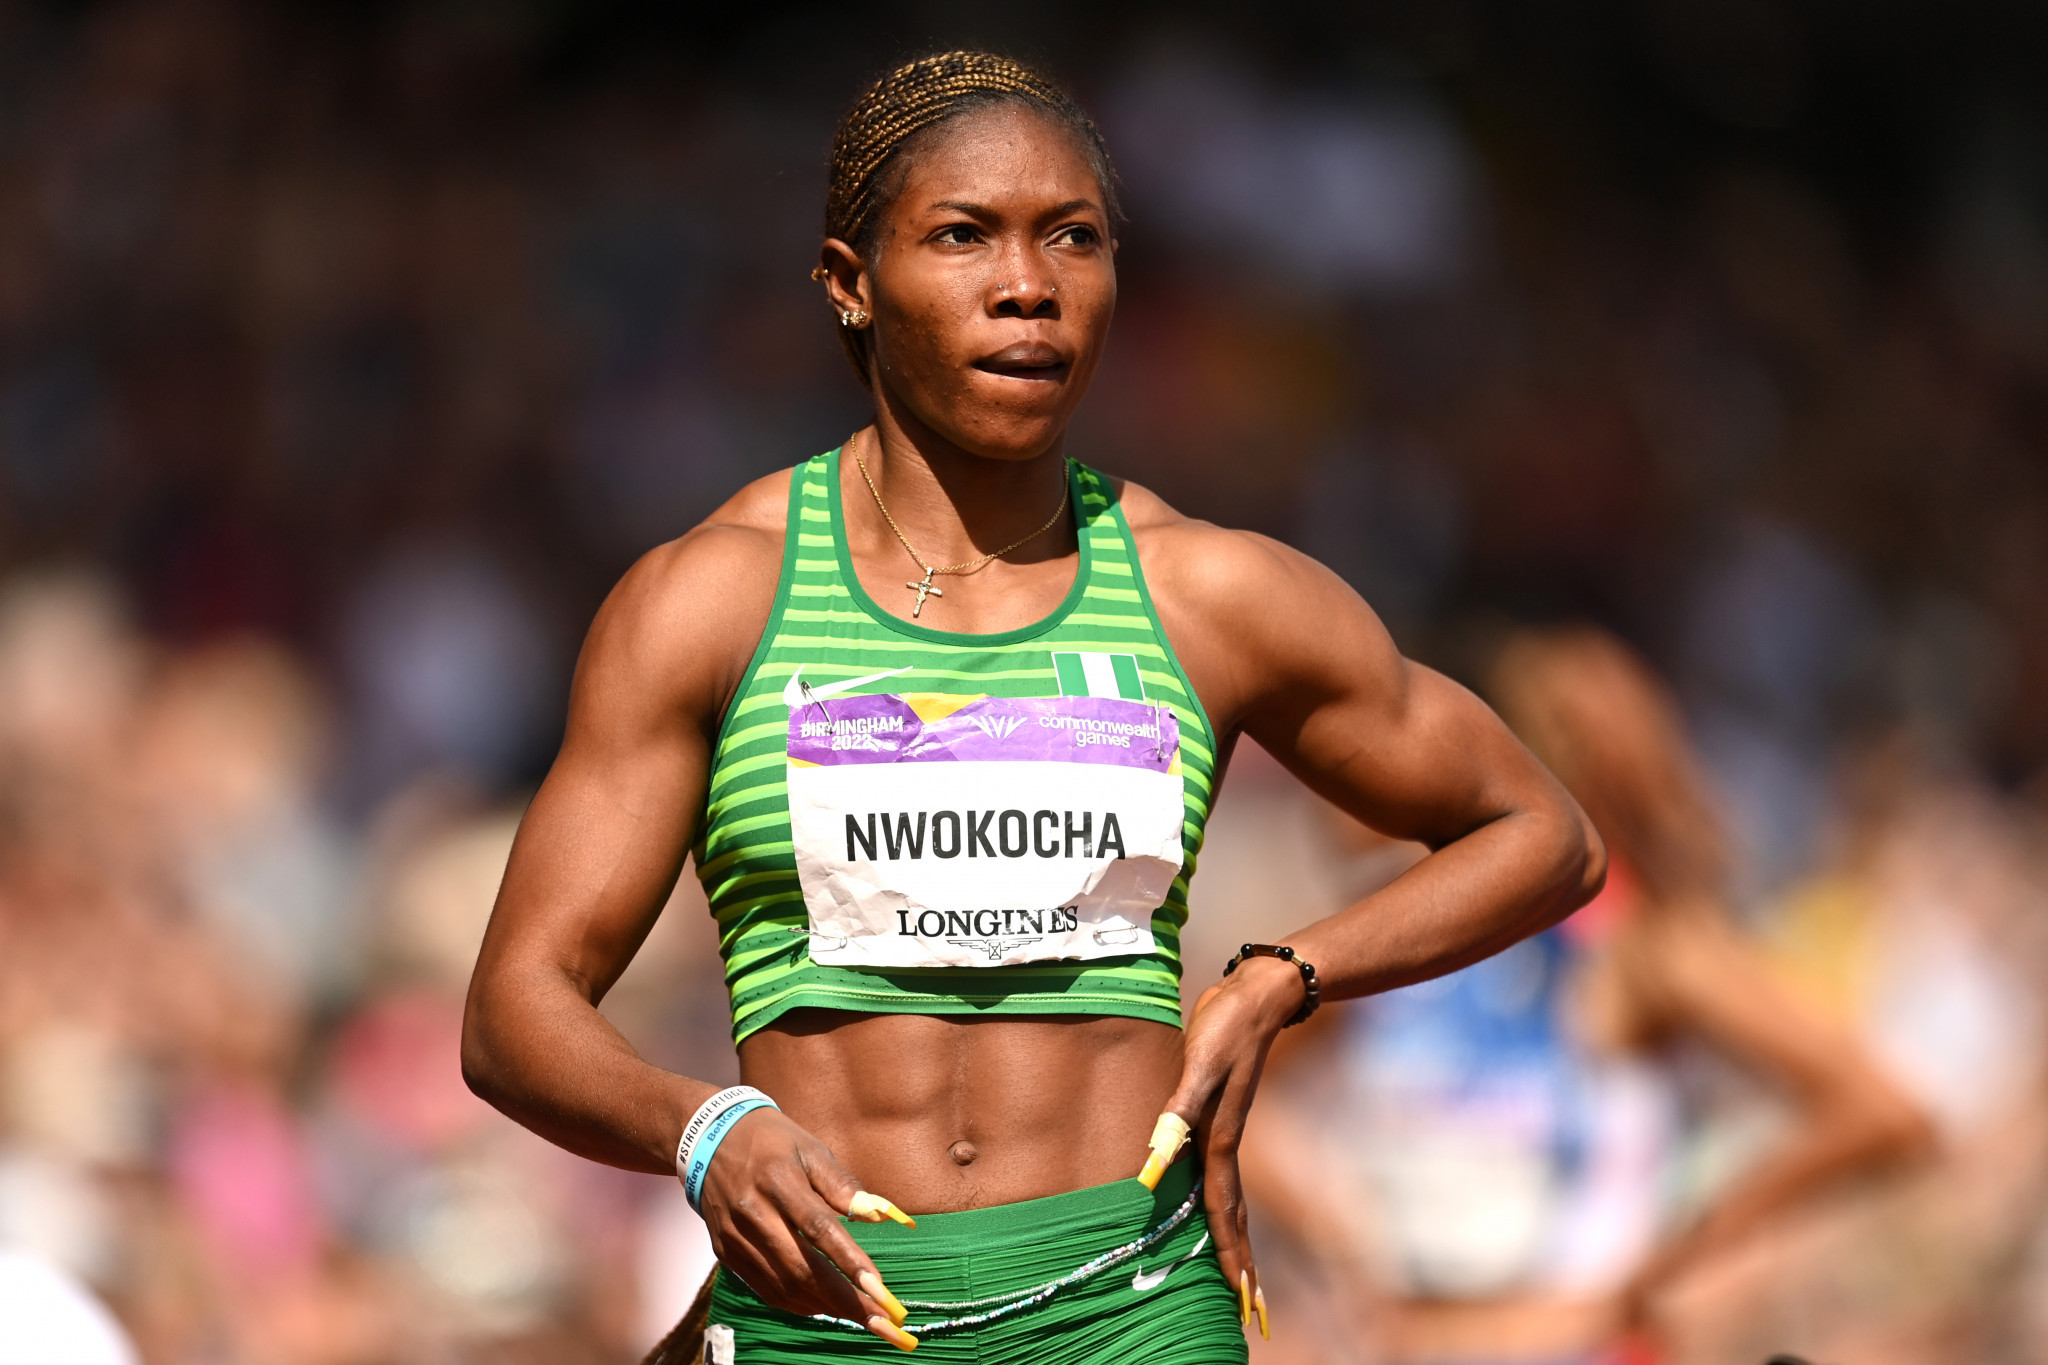 Nigerian sprinter Nwokocha receives three-year ban for positive drugs test at Birmingham 2022